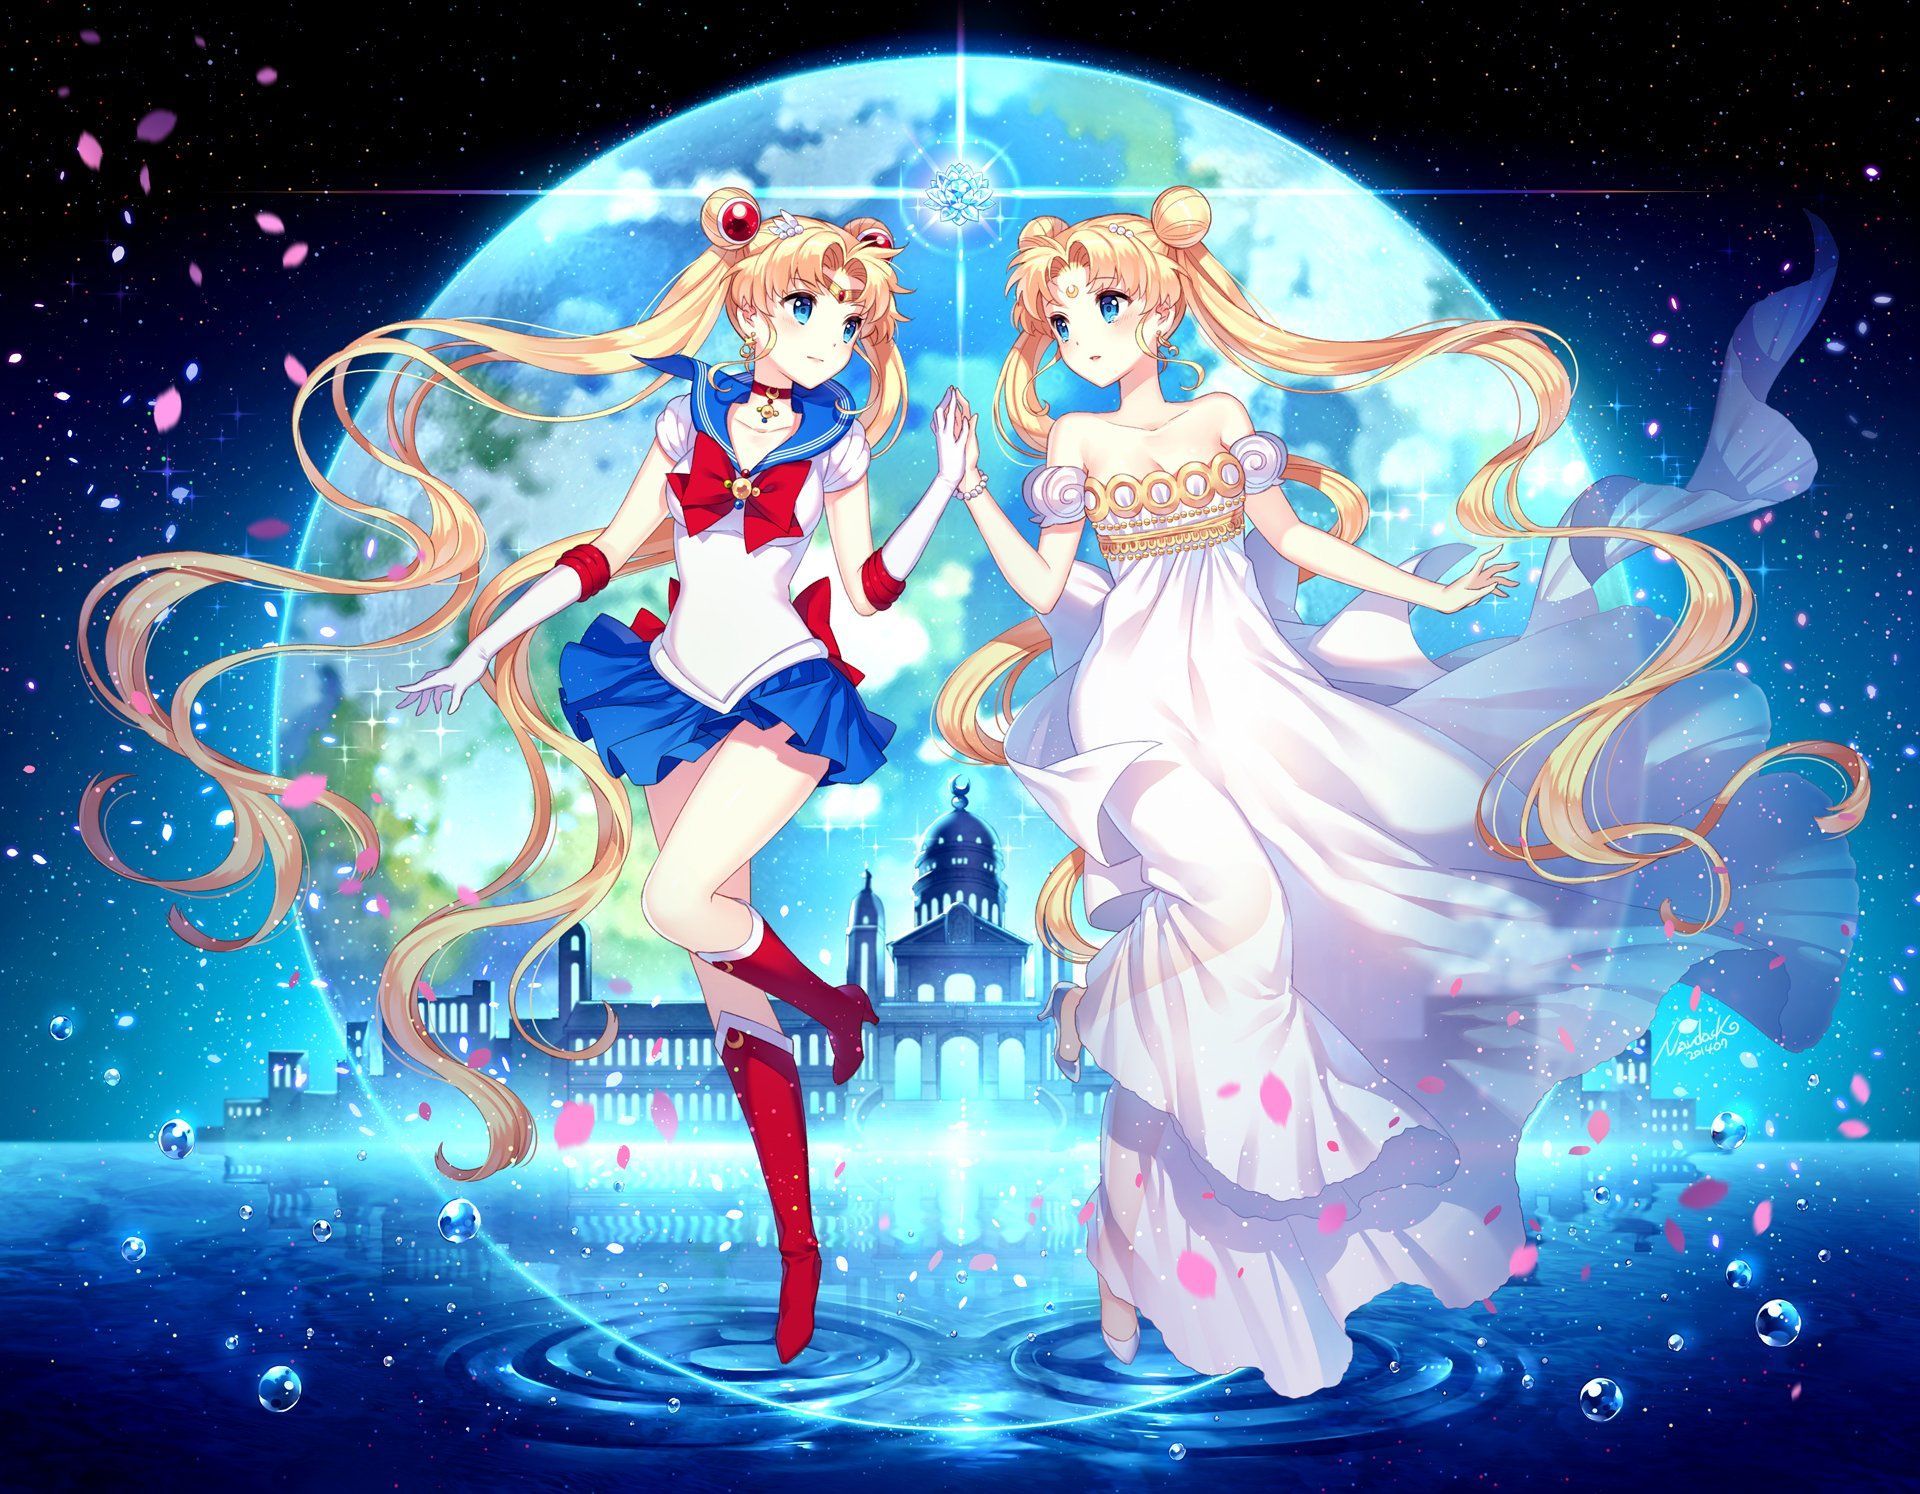 Sailor Moon Wallpaper Free .wallpaperaccess.com